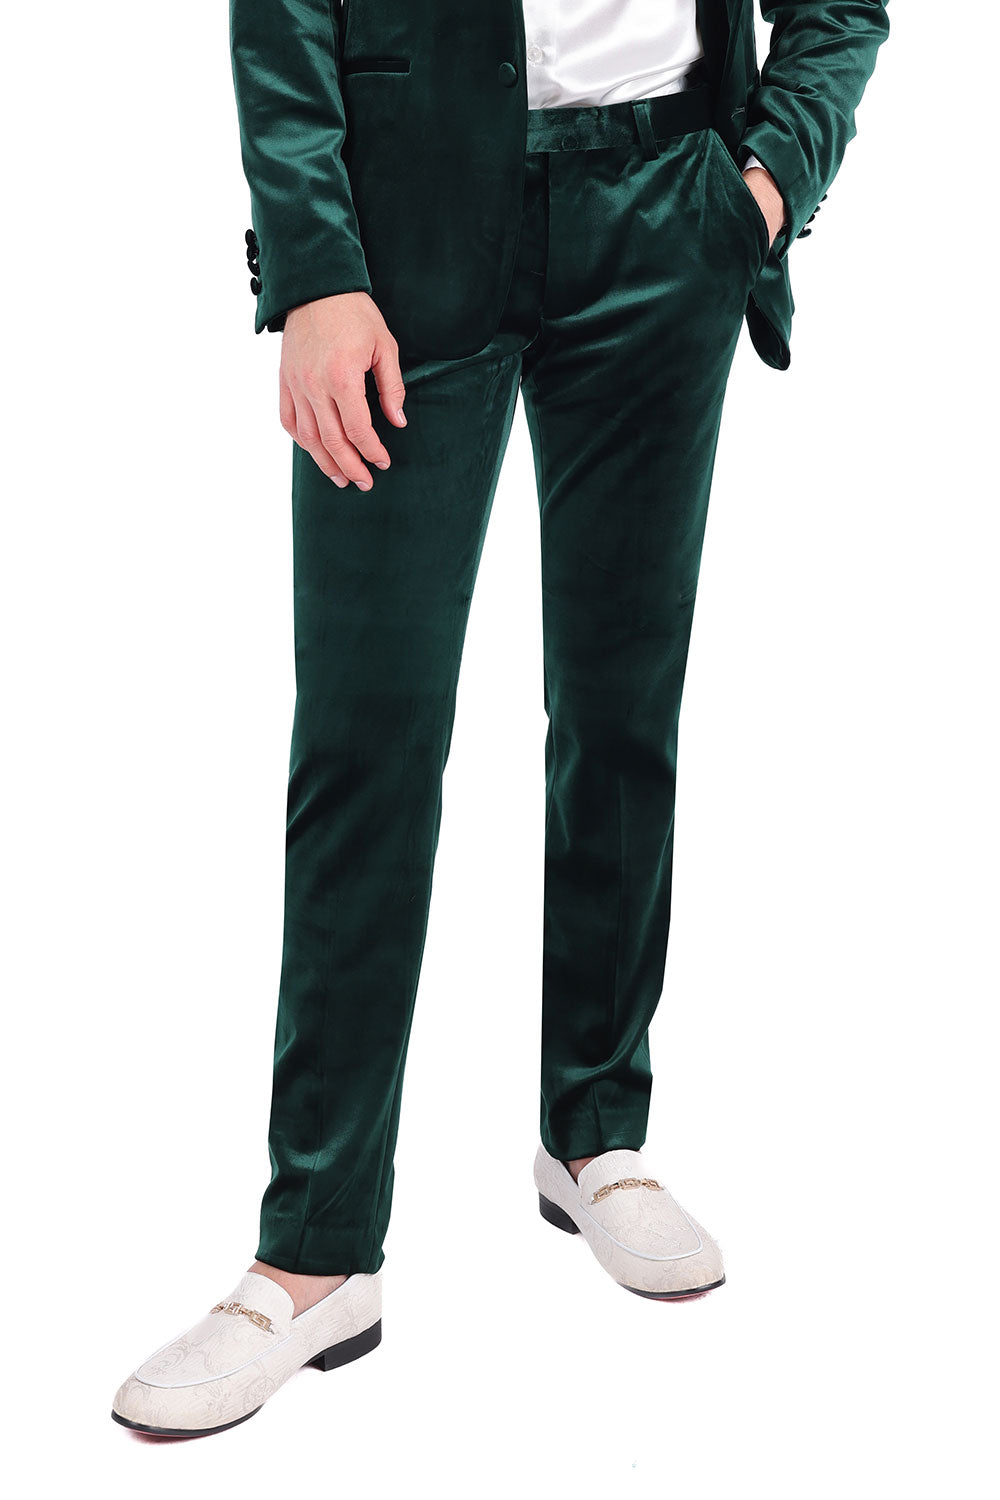 Barabas Men's Velvet Shiny Chino Solid Color Dress Pants 3CP04 Hunter Green